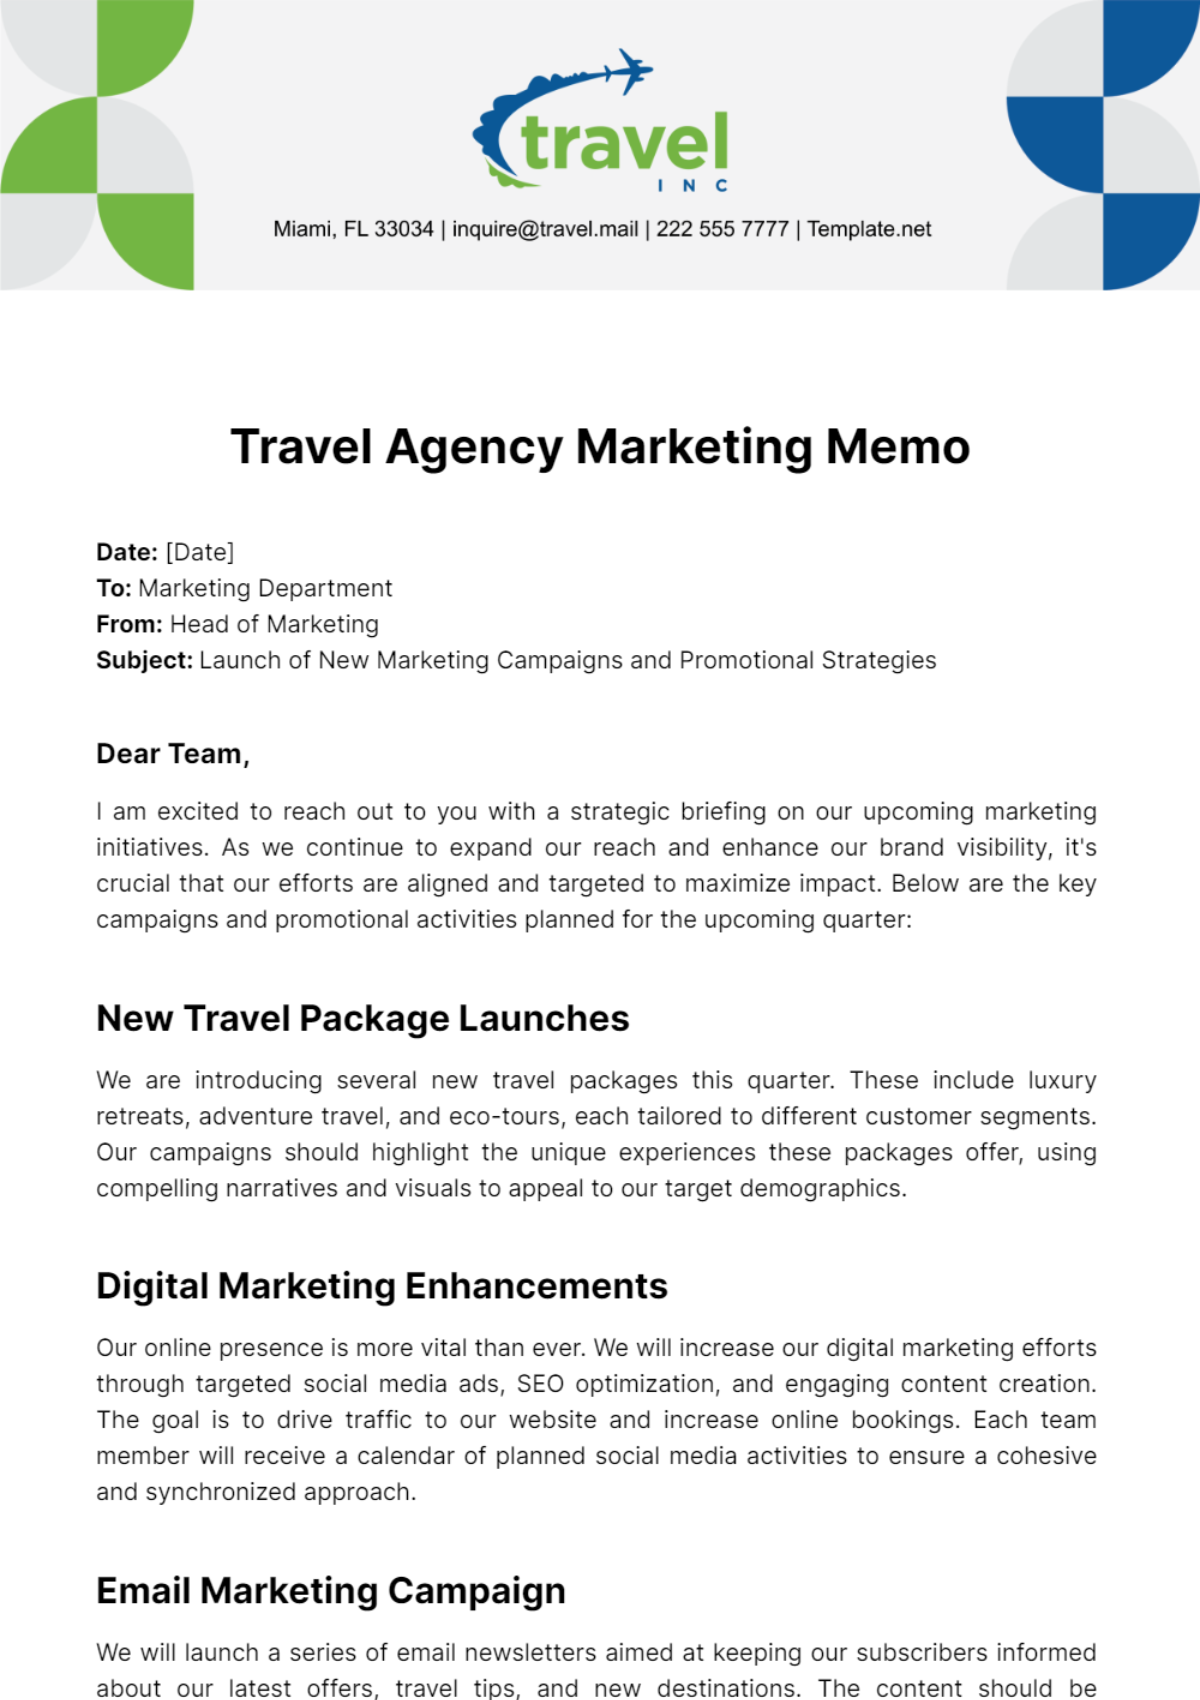 Free Travel Agency Marketing Memo Template